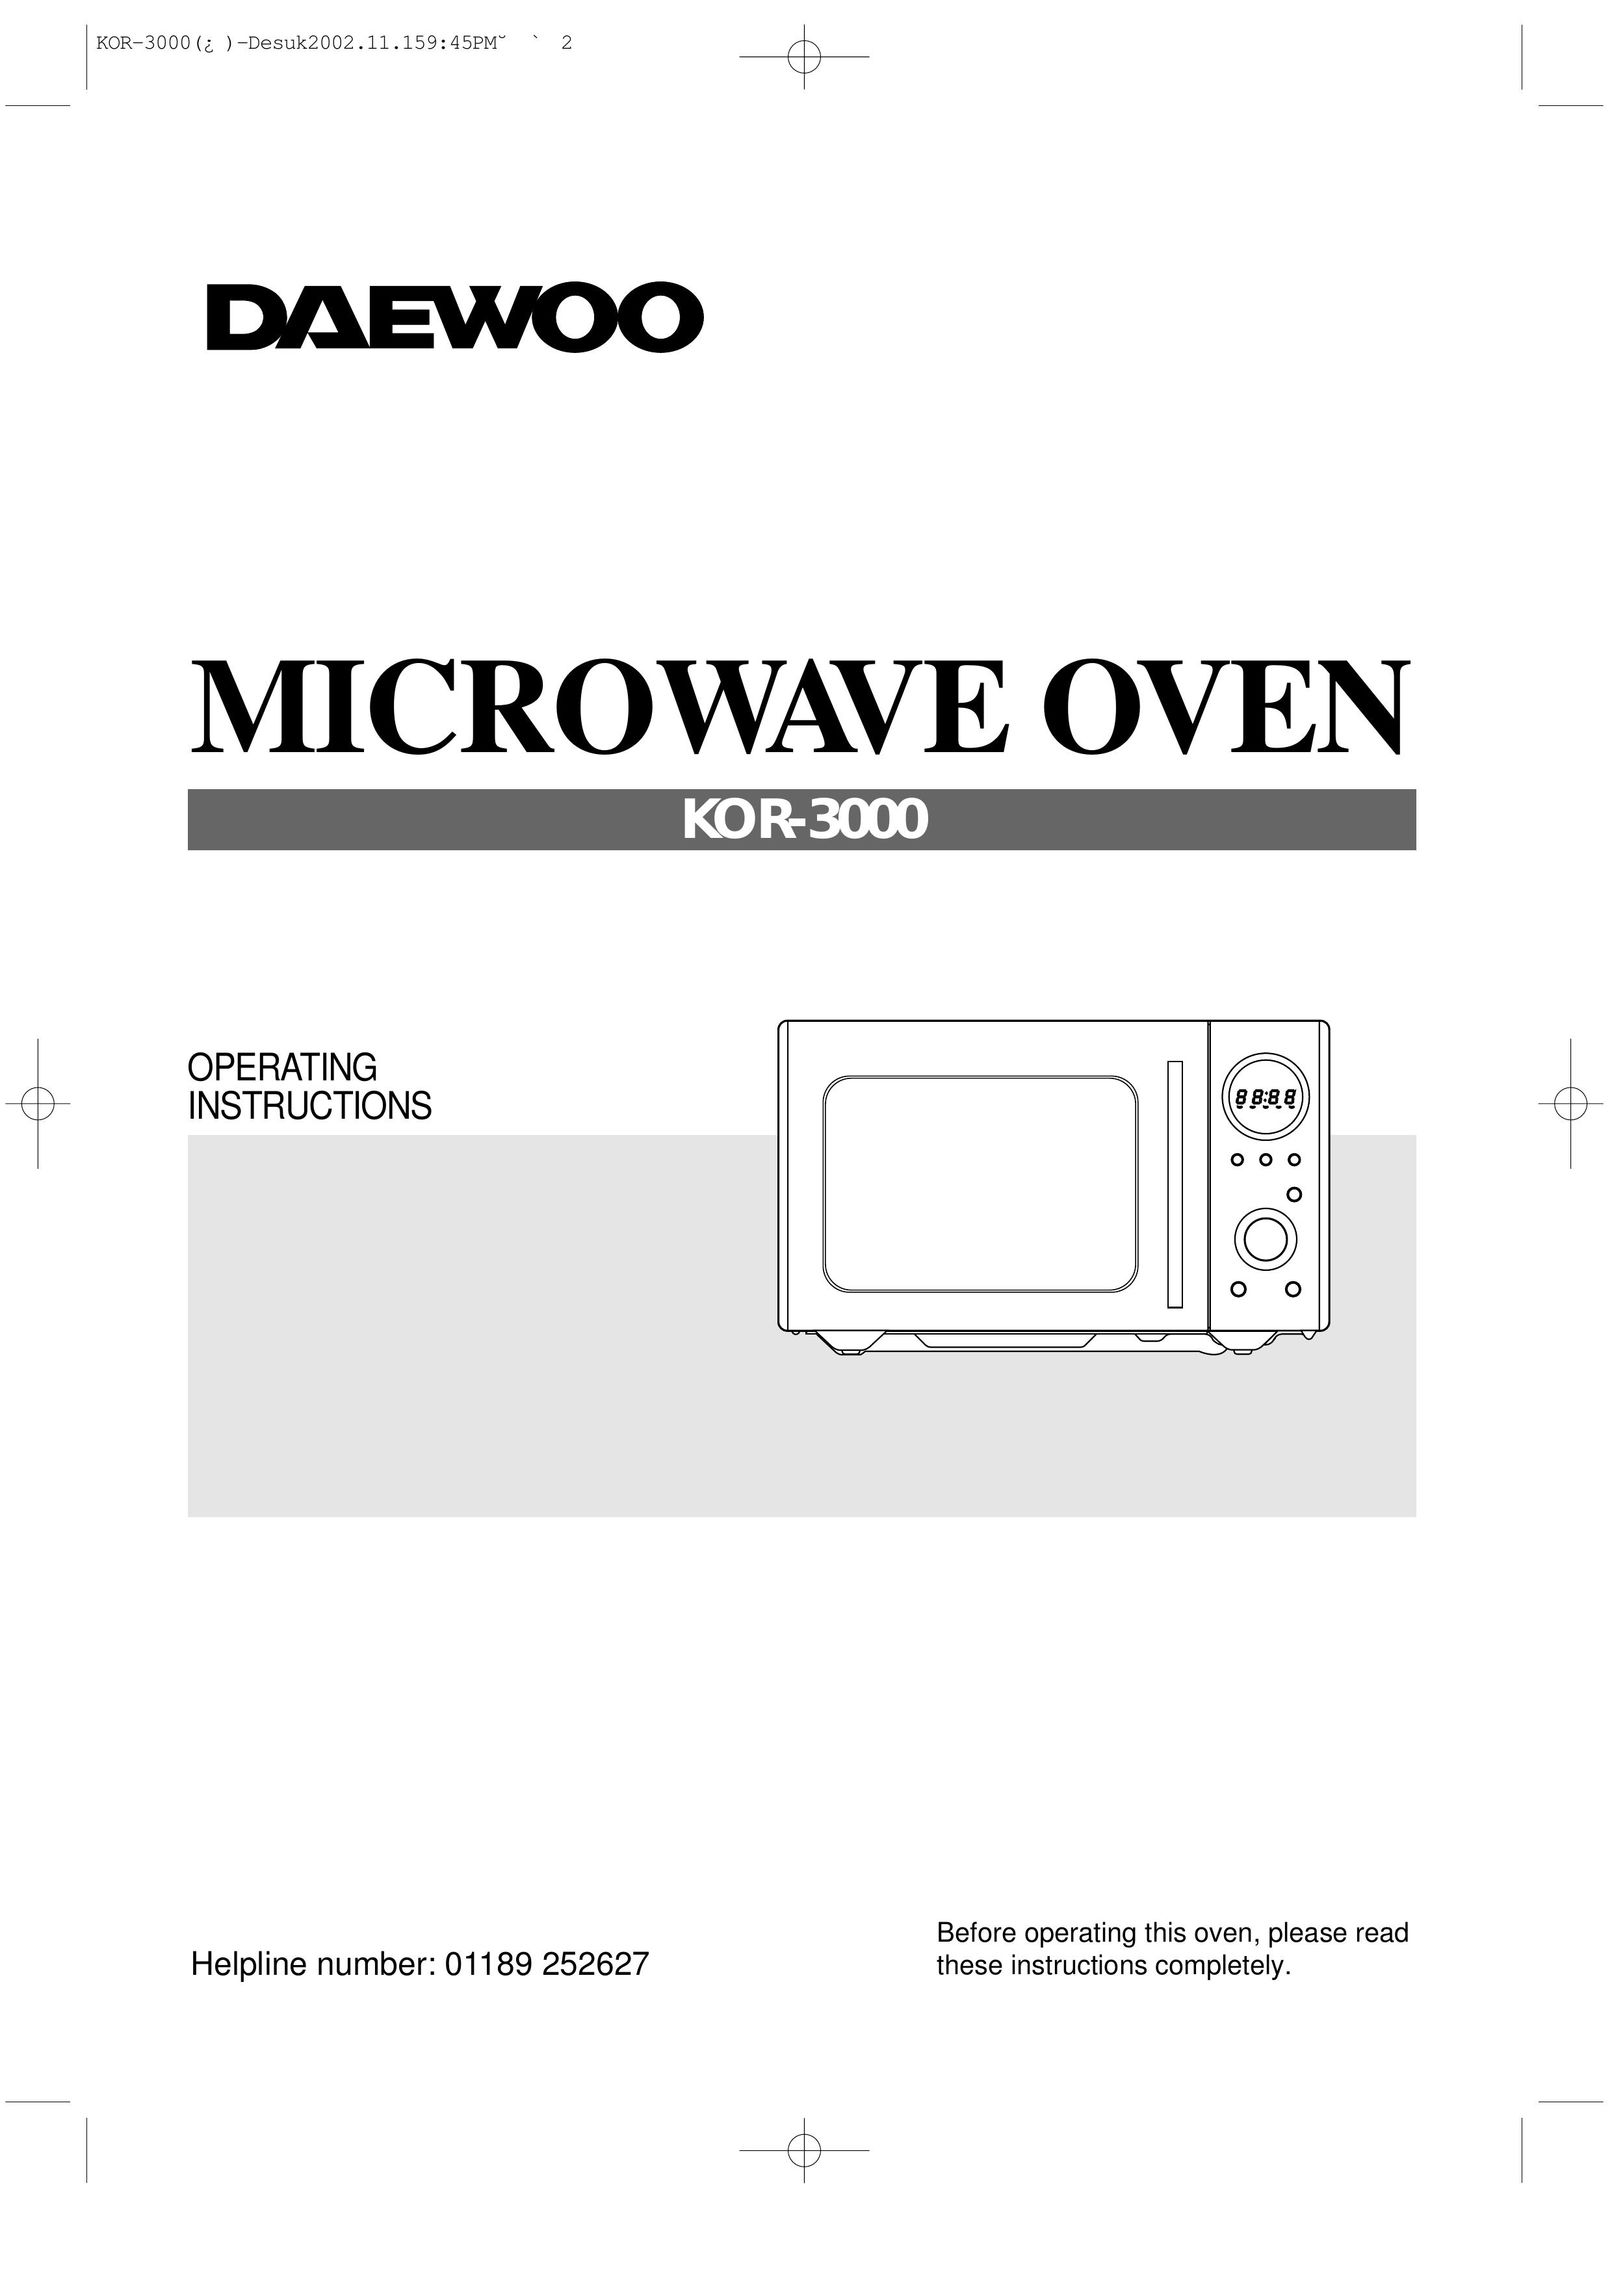 Daewoo KOR-3000 Microwave Oven User Manual